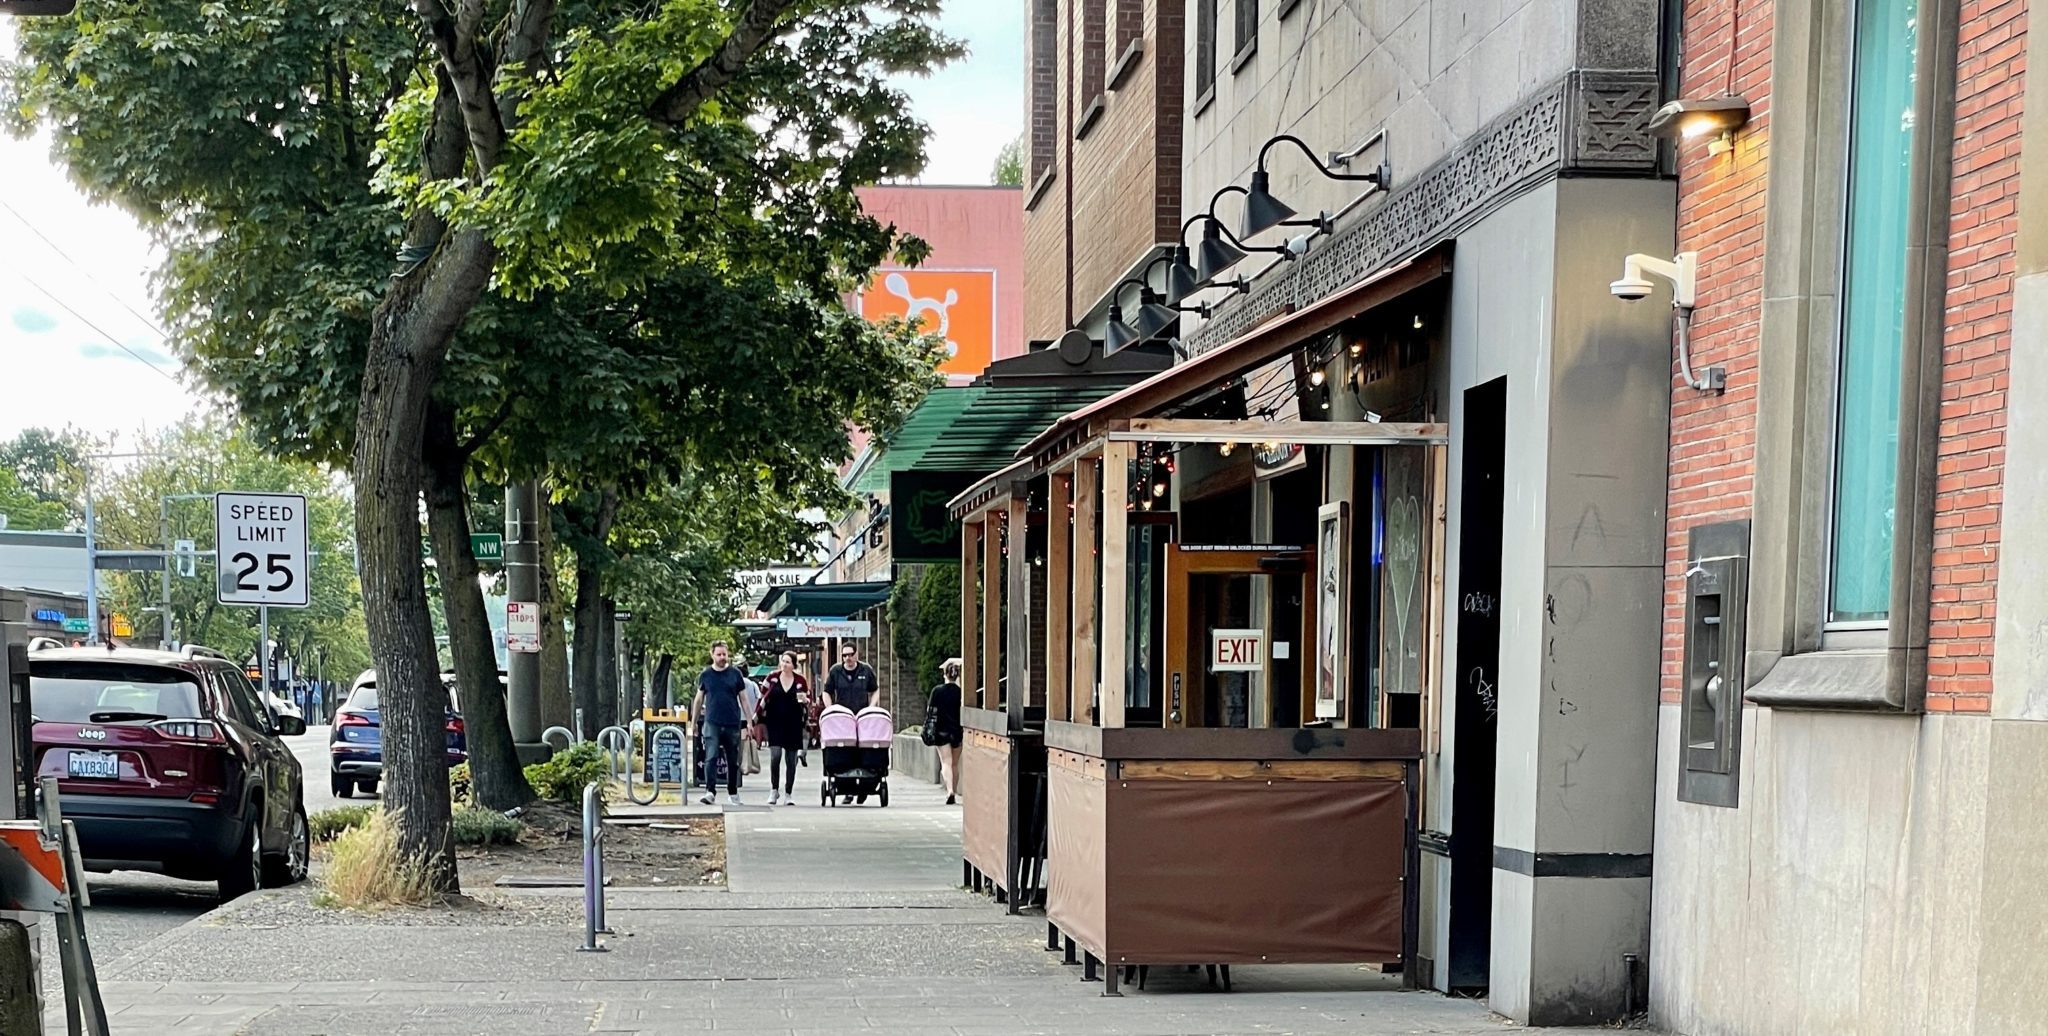 Street trees and a street café on NW Market St in Ballard.